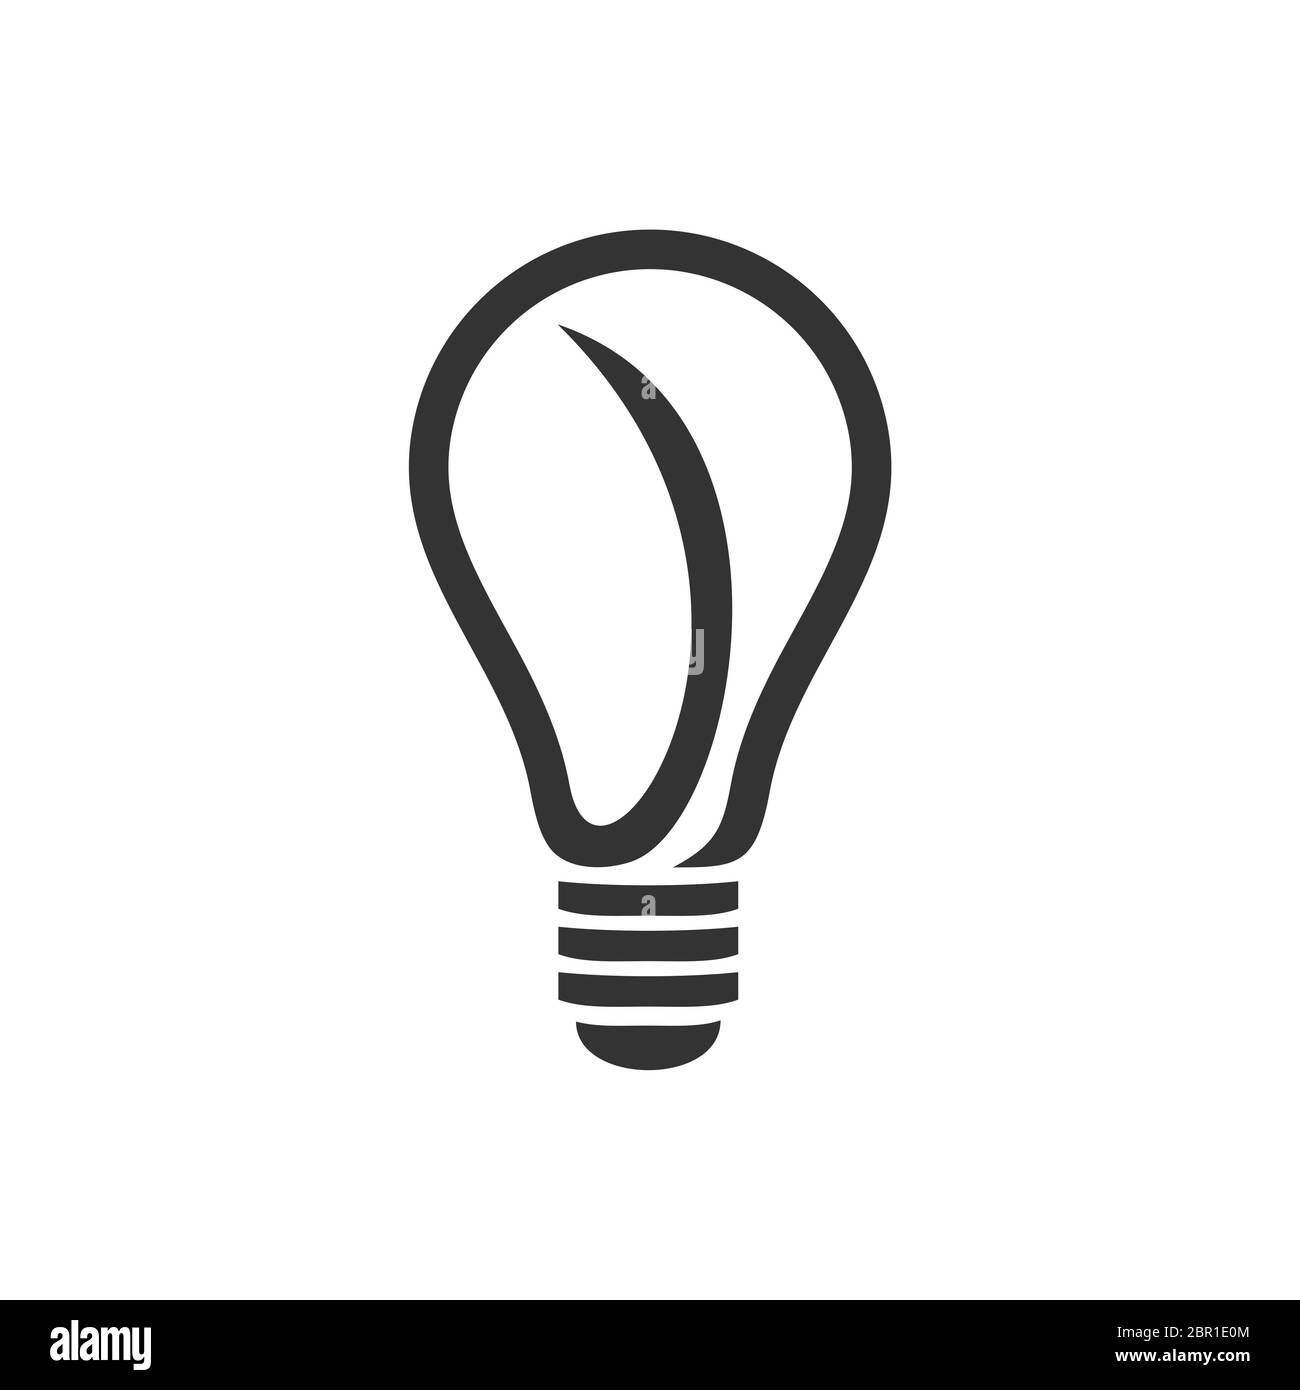 Bulb Lamp Logo Template Illustration Design. EPS Stock Photo - Alamy